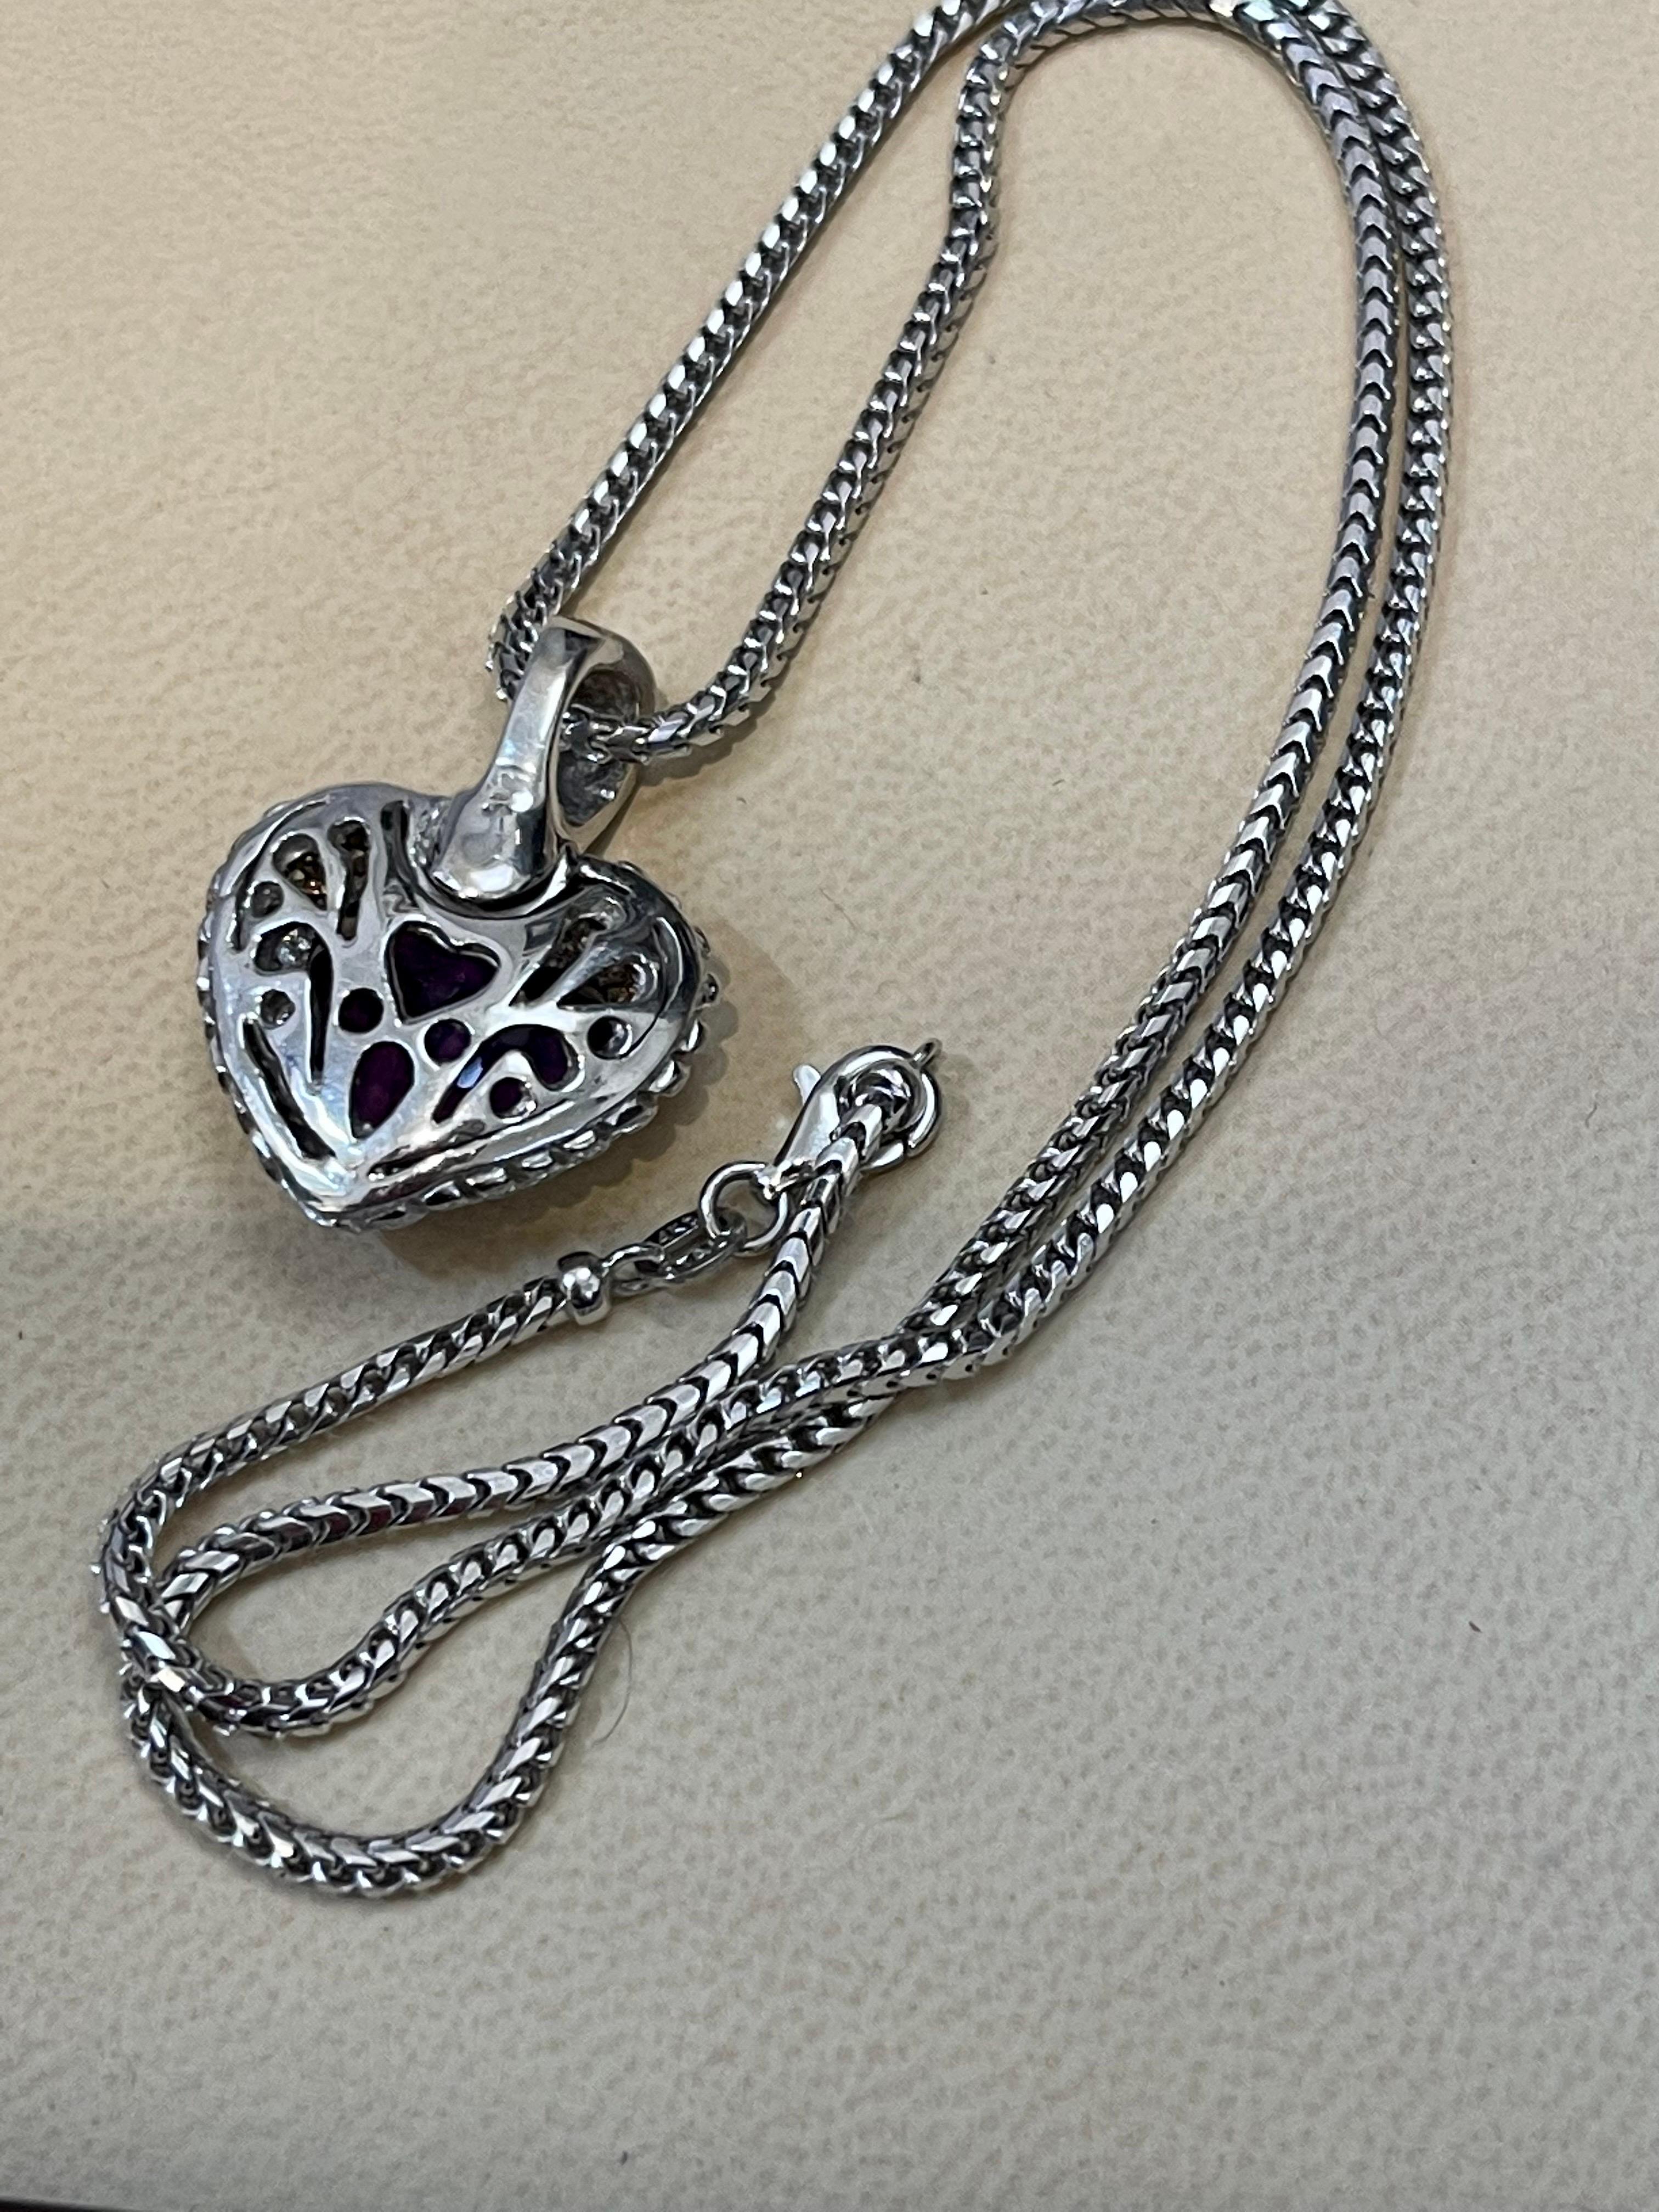 10 Carat Heart Shape Amethyst & 1 Ct Diamond Pendant Necklace 18 Kt White Gold 2